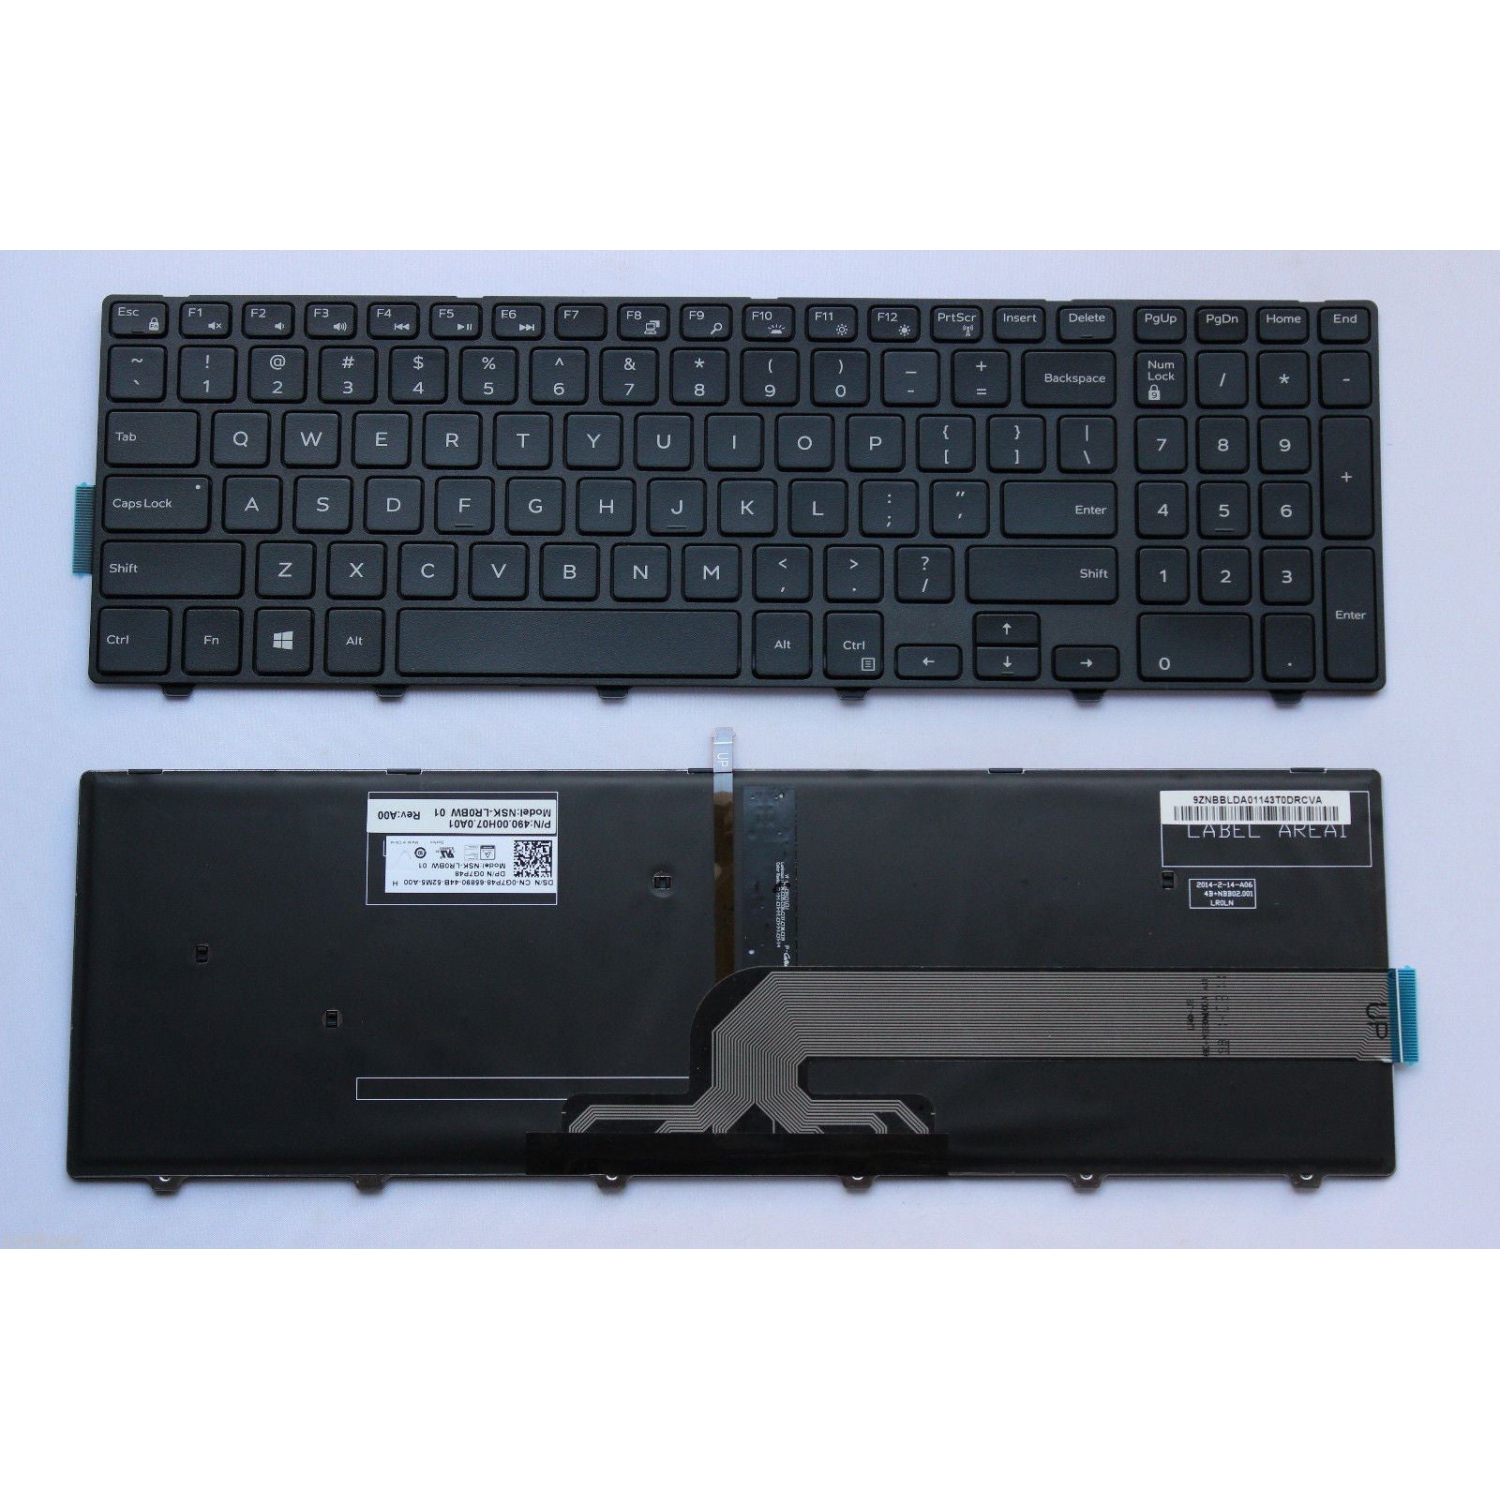 New Dell Inspiron 15 5000 5548 5551 5558 5559 Keyboard Backlit English G7P48 0G7P48